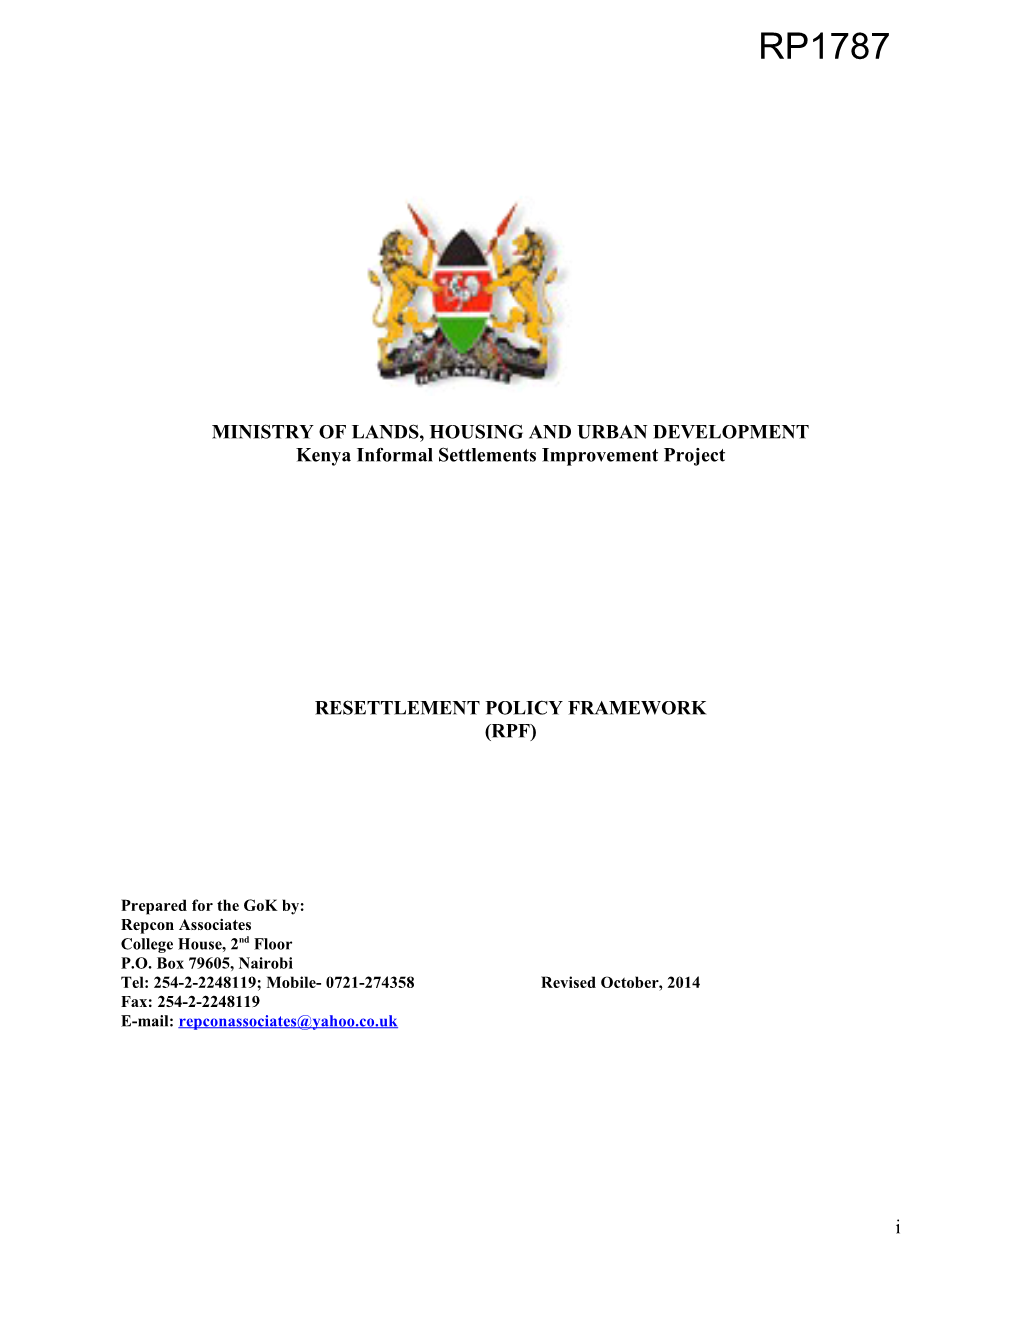 The Kenya Municipal Programme Draft Resettlement Policy Framework